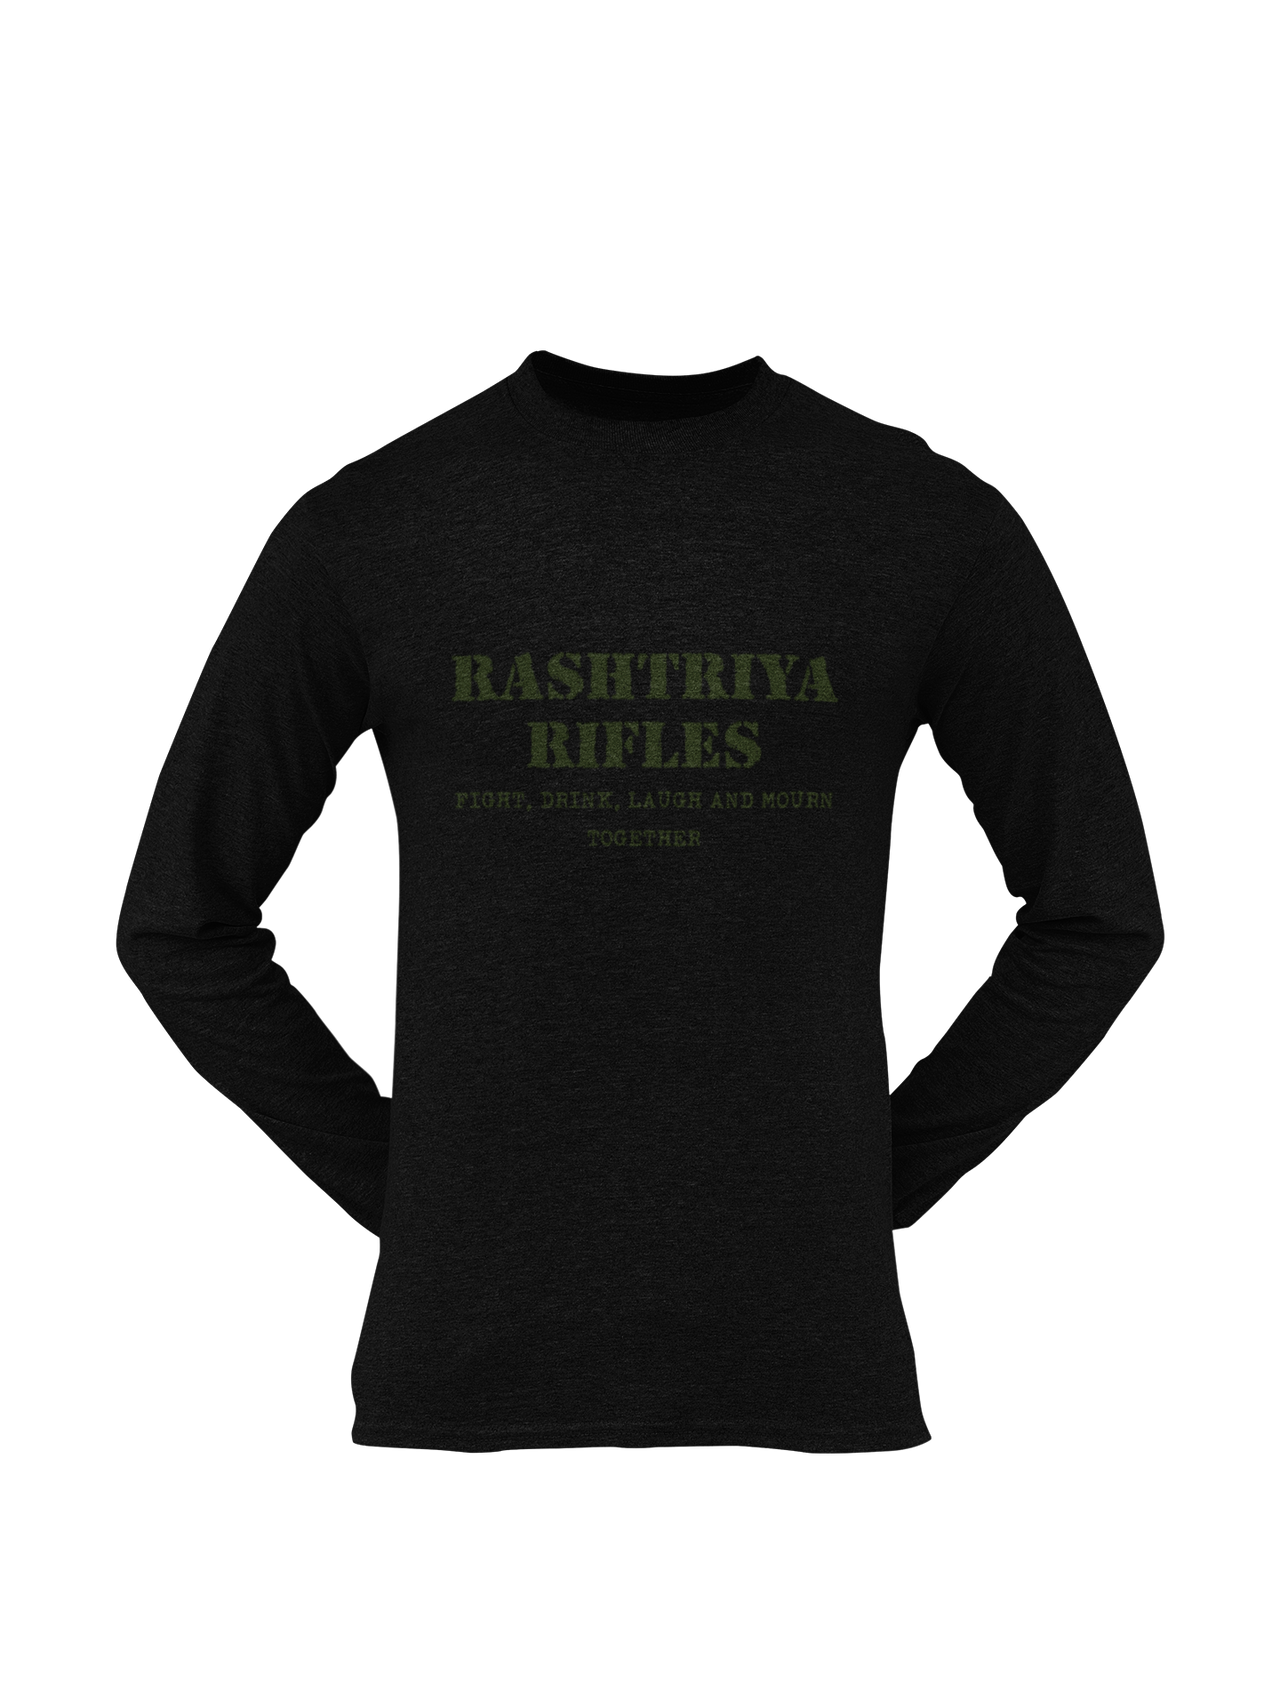 Rashtriya Rifles T-shirt - Fight, Drink, Laugh & Mourn Together ( Men)